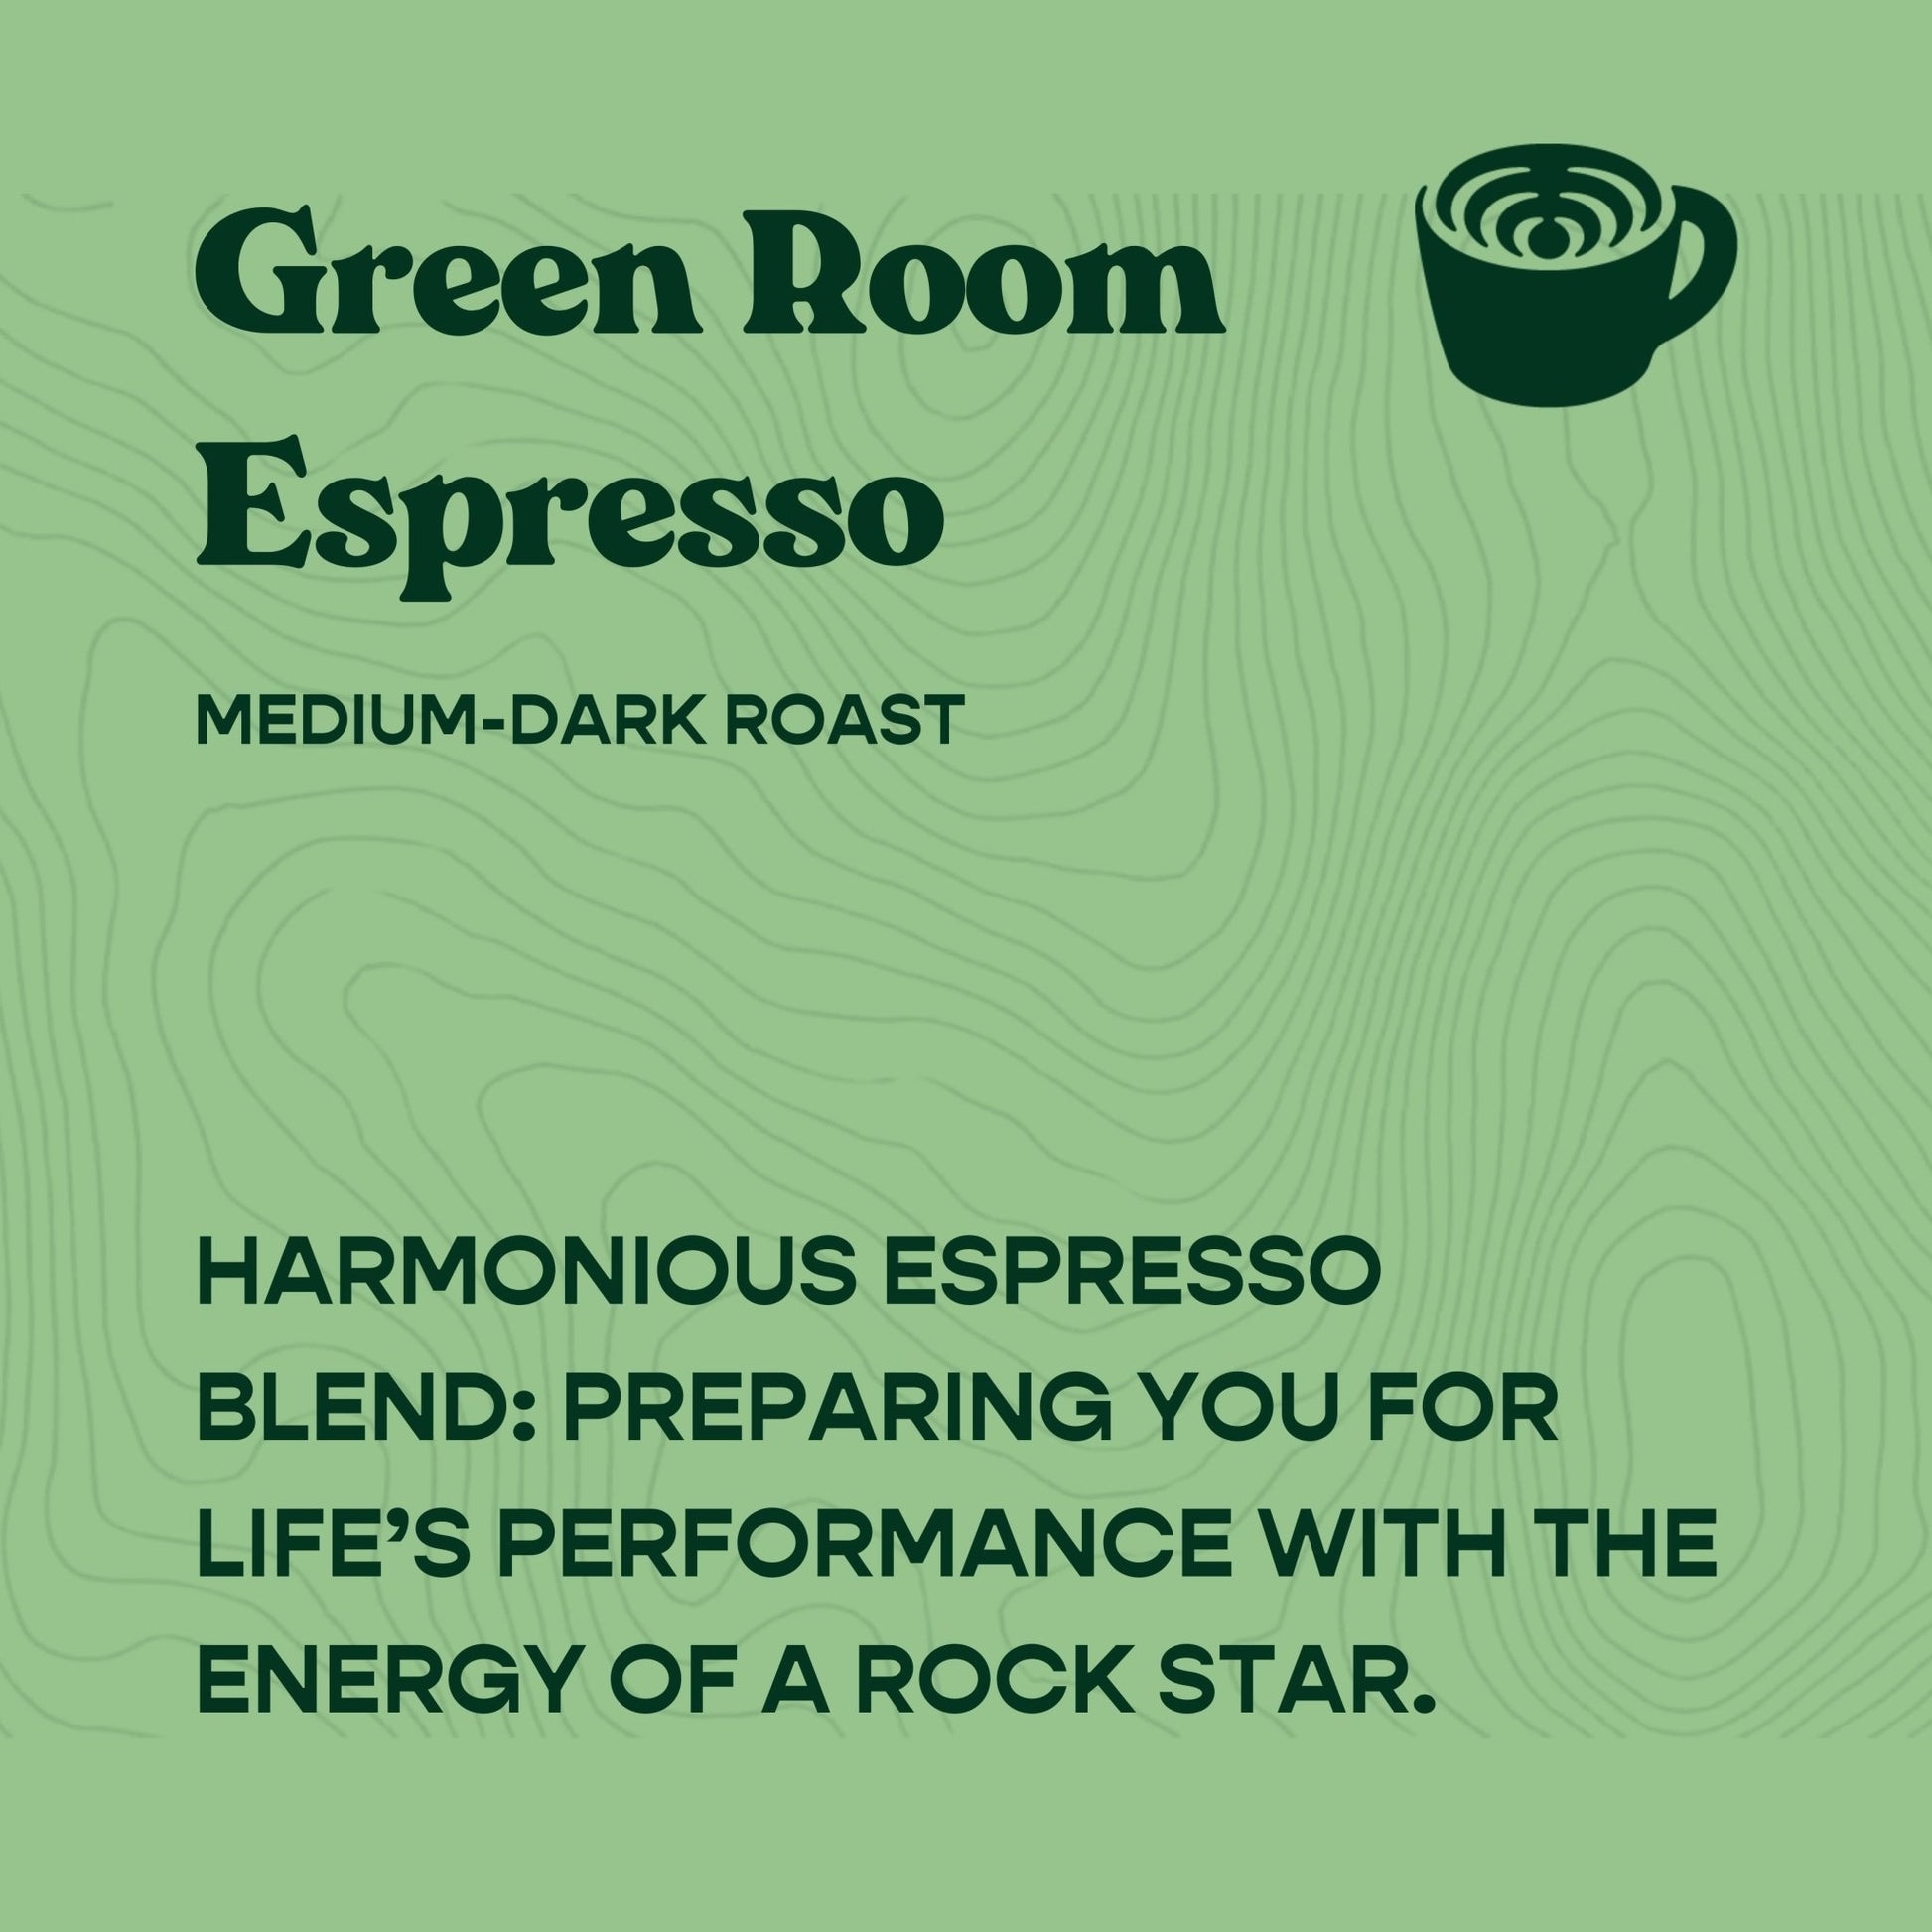 Green Room Espresso Blend - Sound Coffee